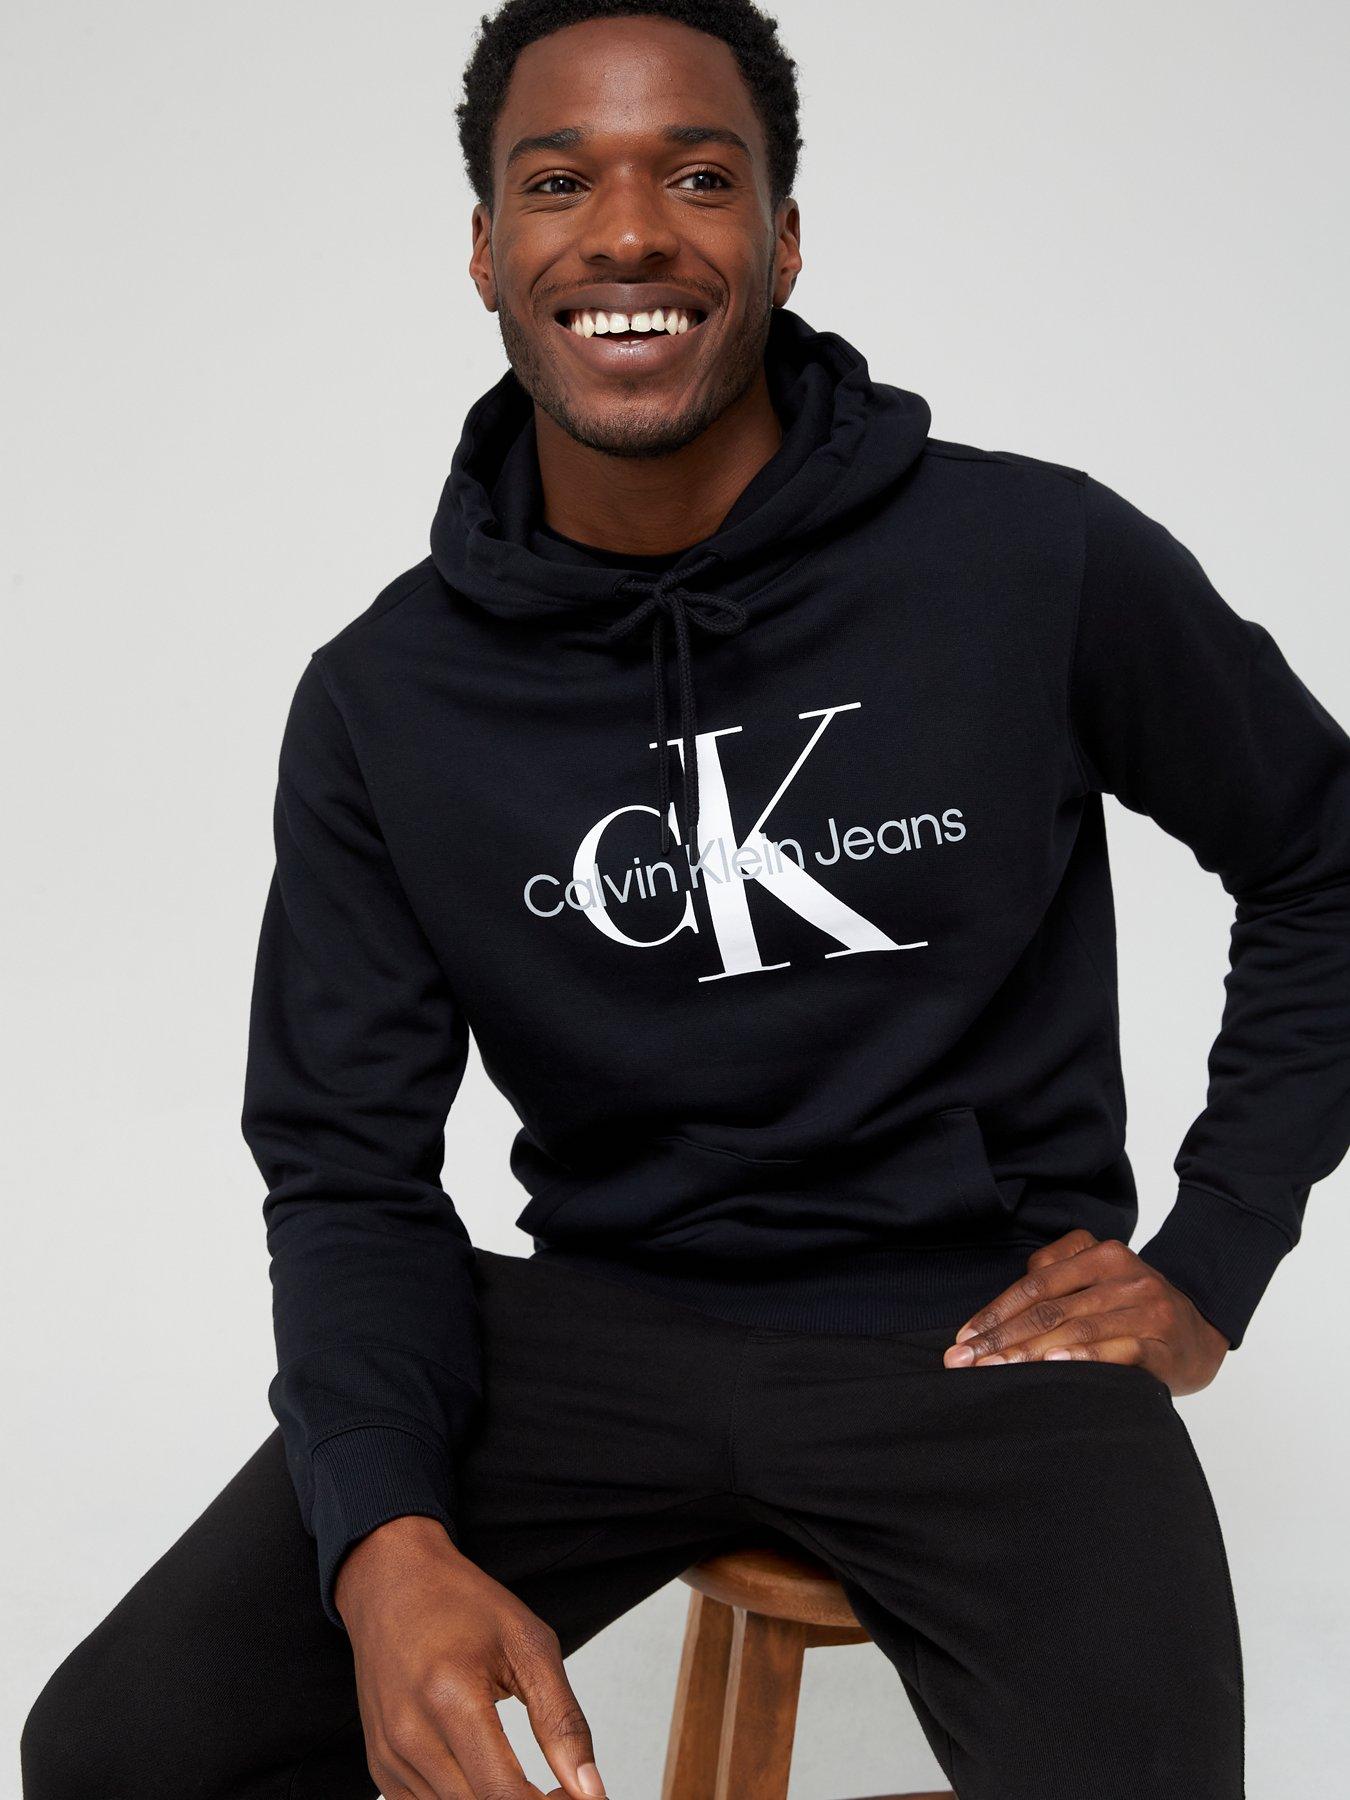 Fashion Sweats Sweatshirts Calvin Klein Jeans Sweat Shirt black printed lettering casual look 